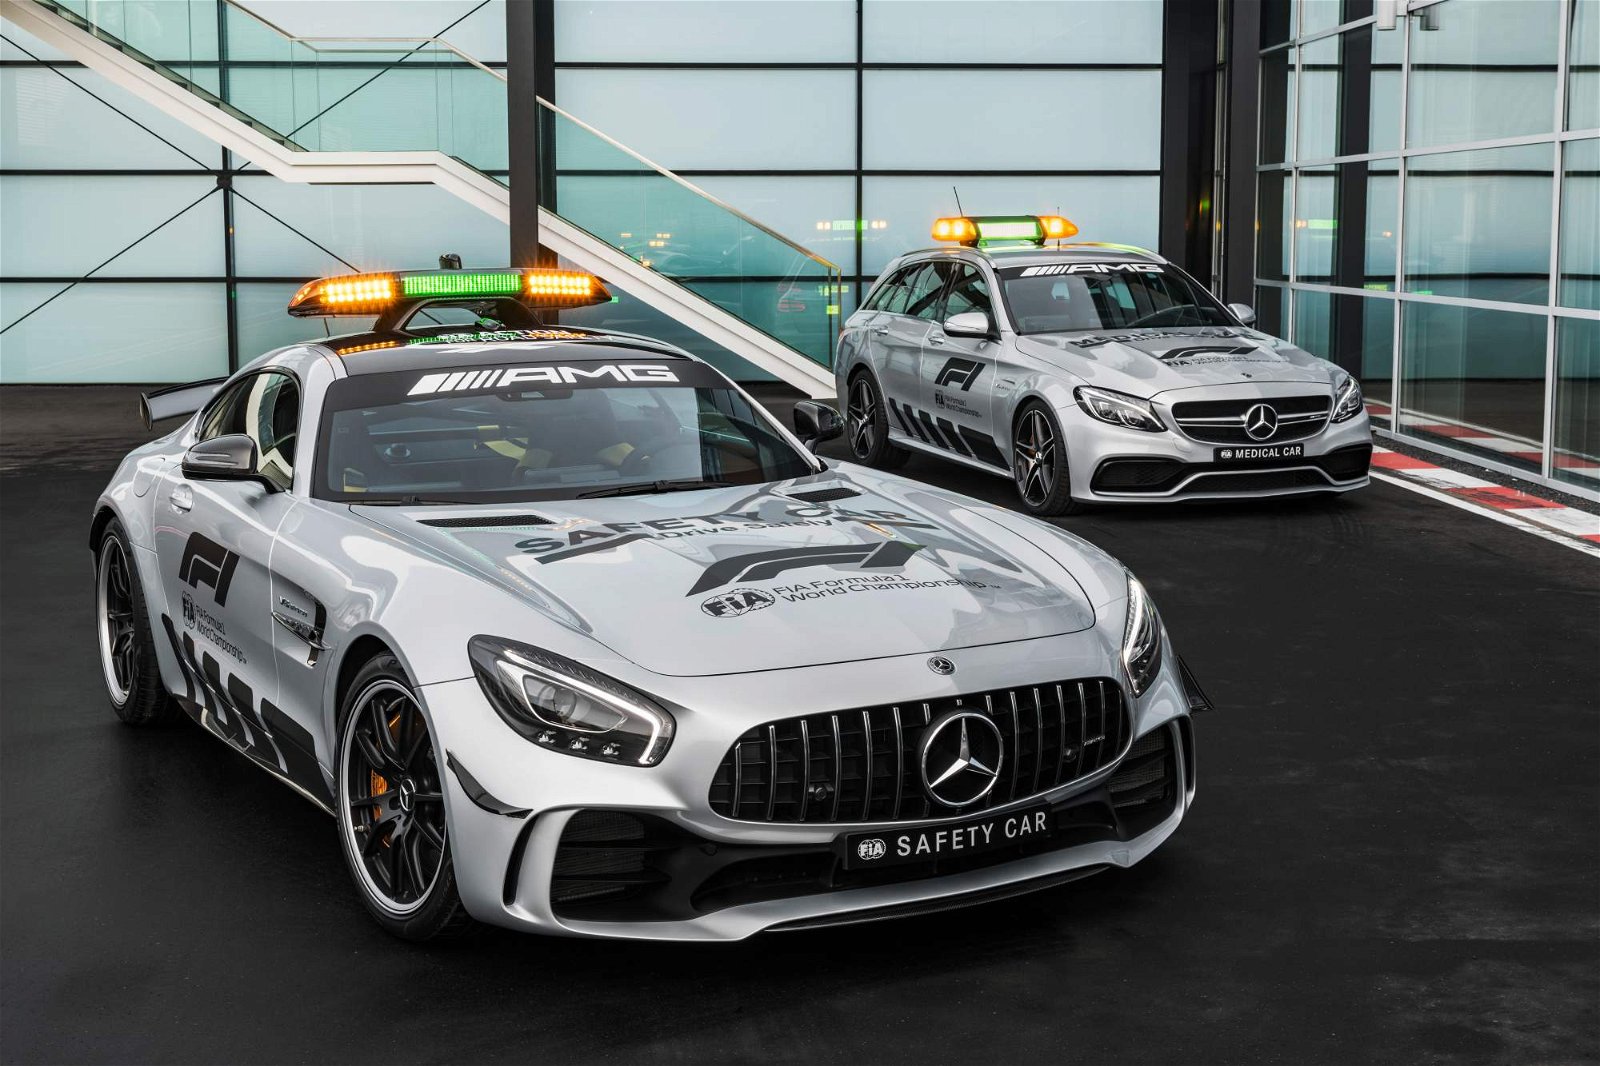 Mercedes-AMG-GT-R-Official-F1-Safety-Car-2018-12